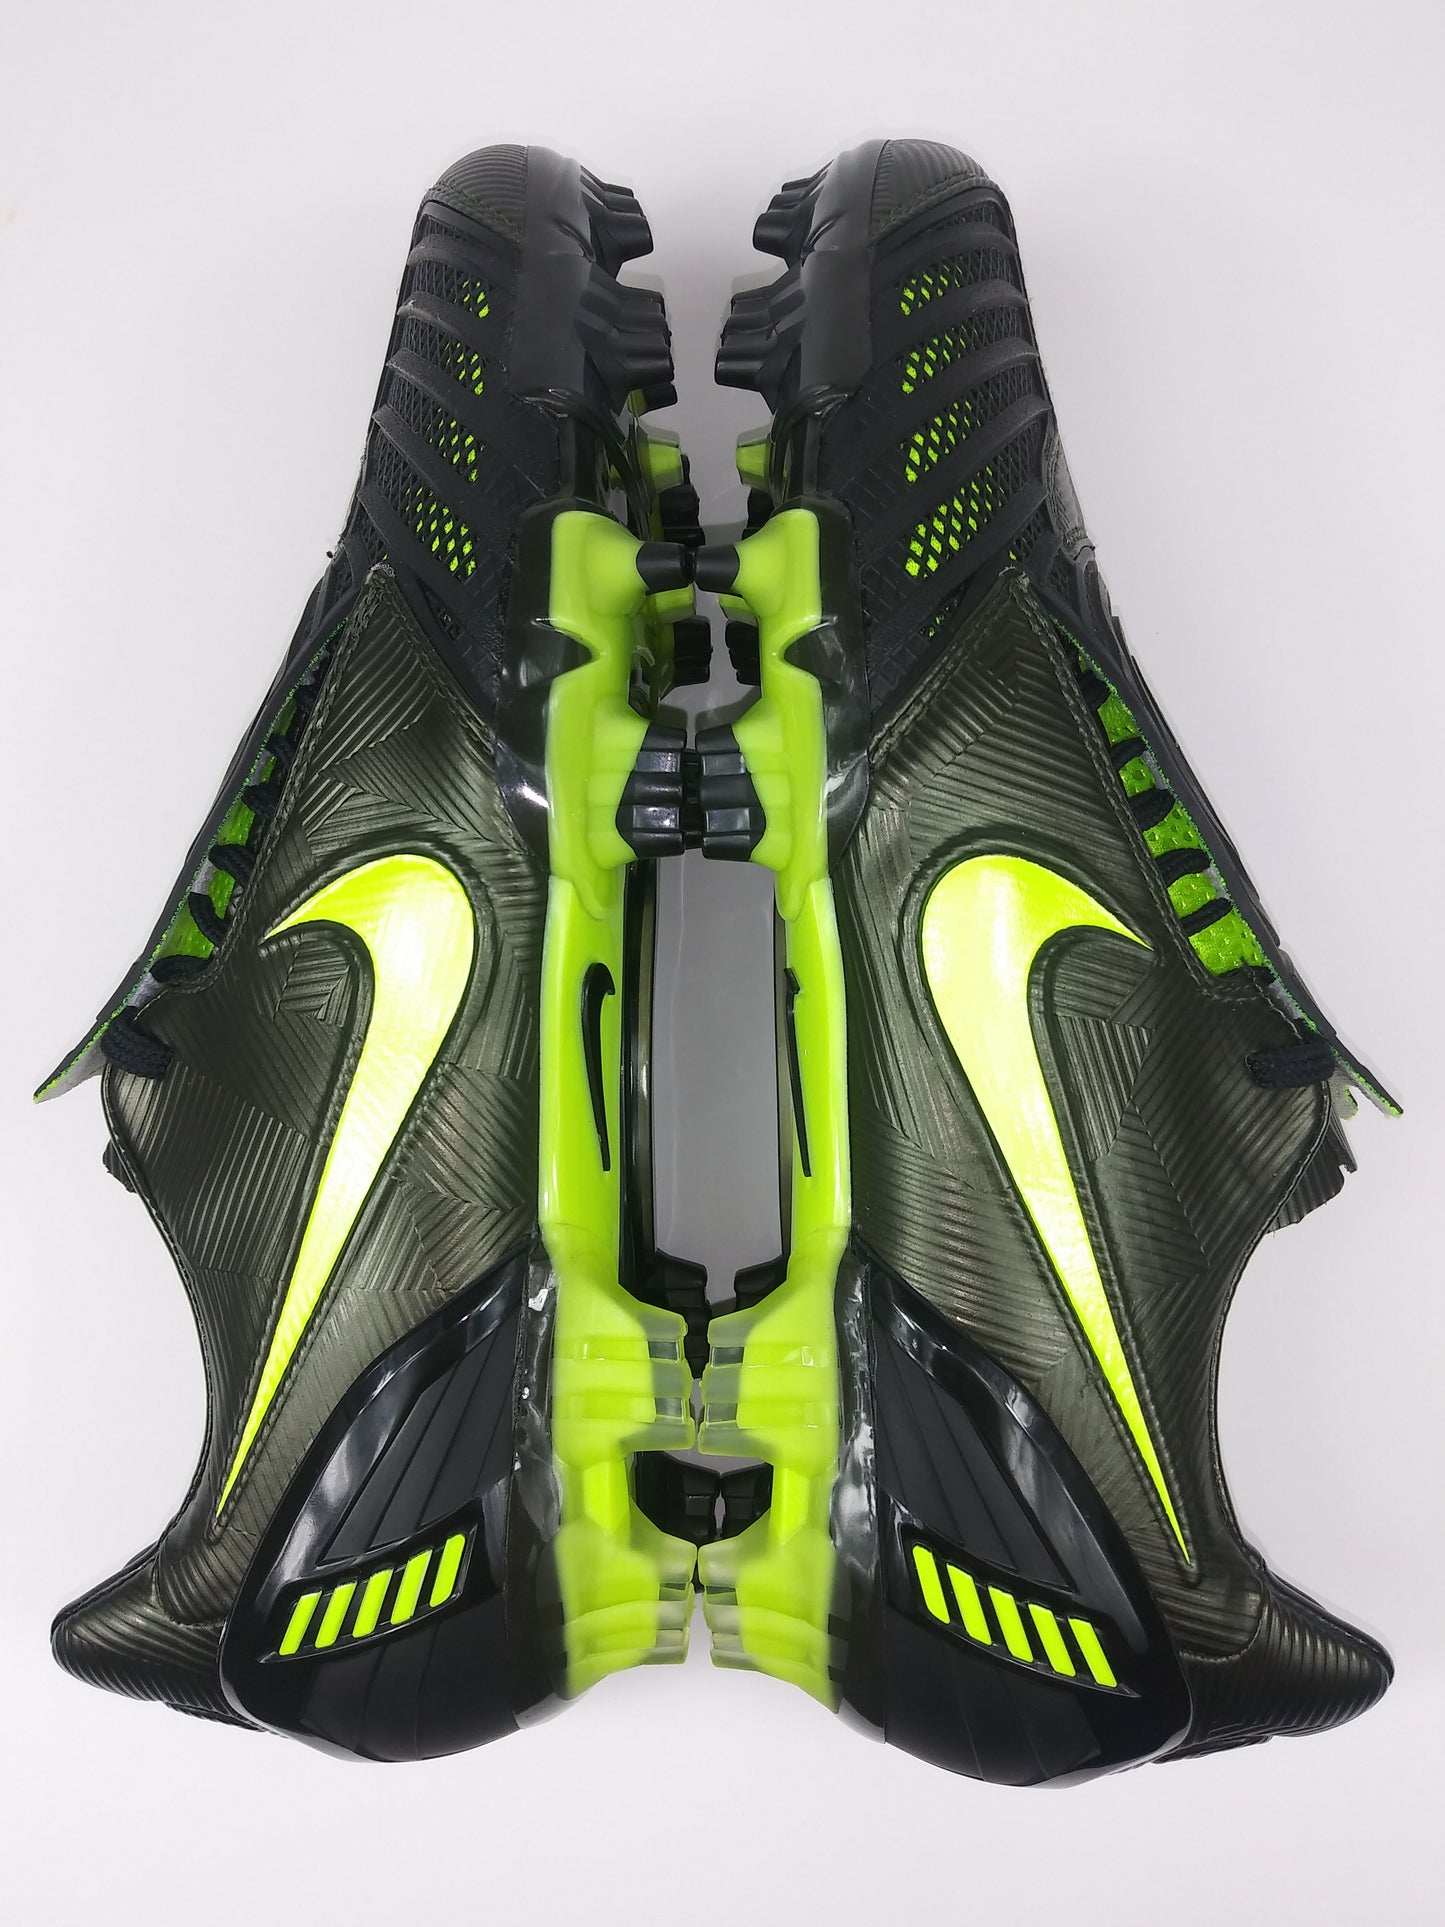 Nike Total90 Laser II FG Green Black